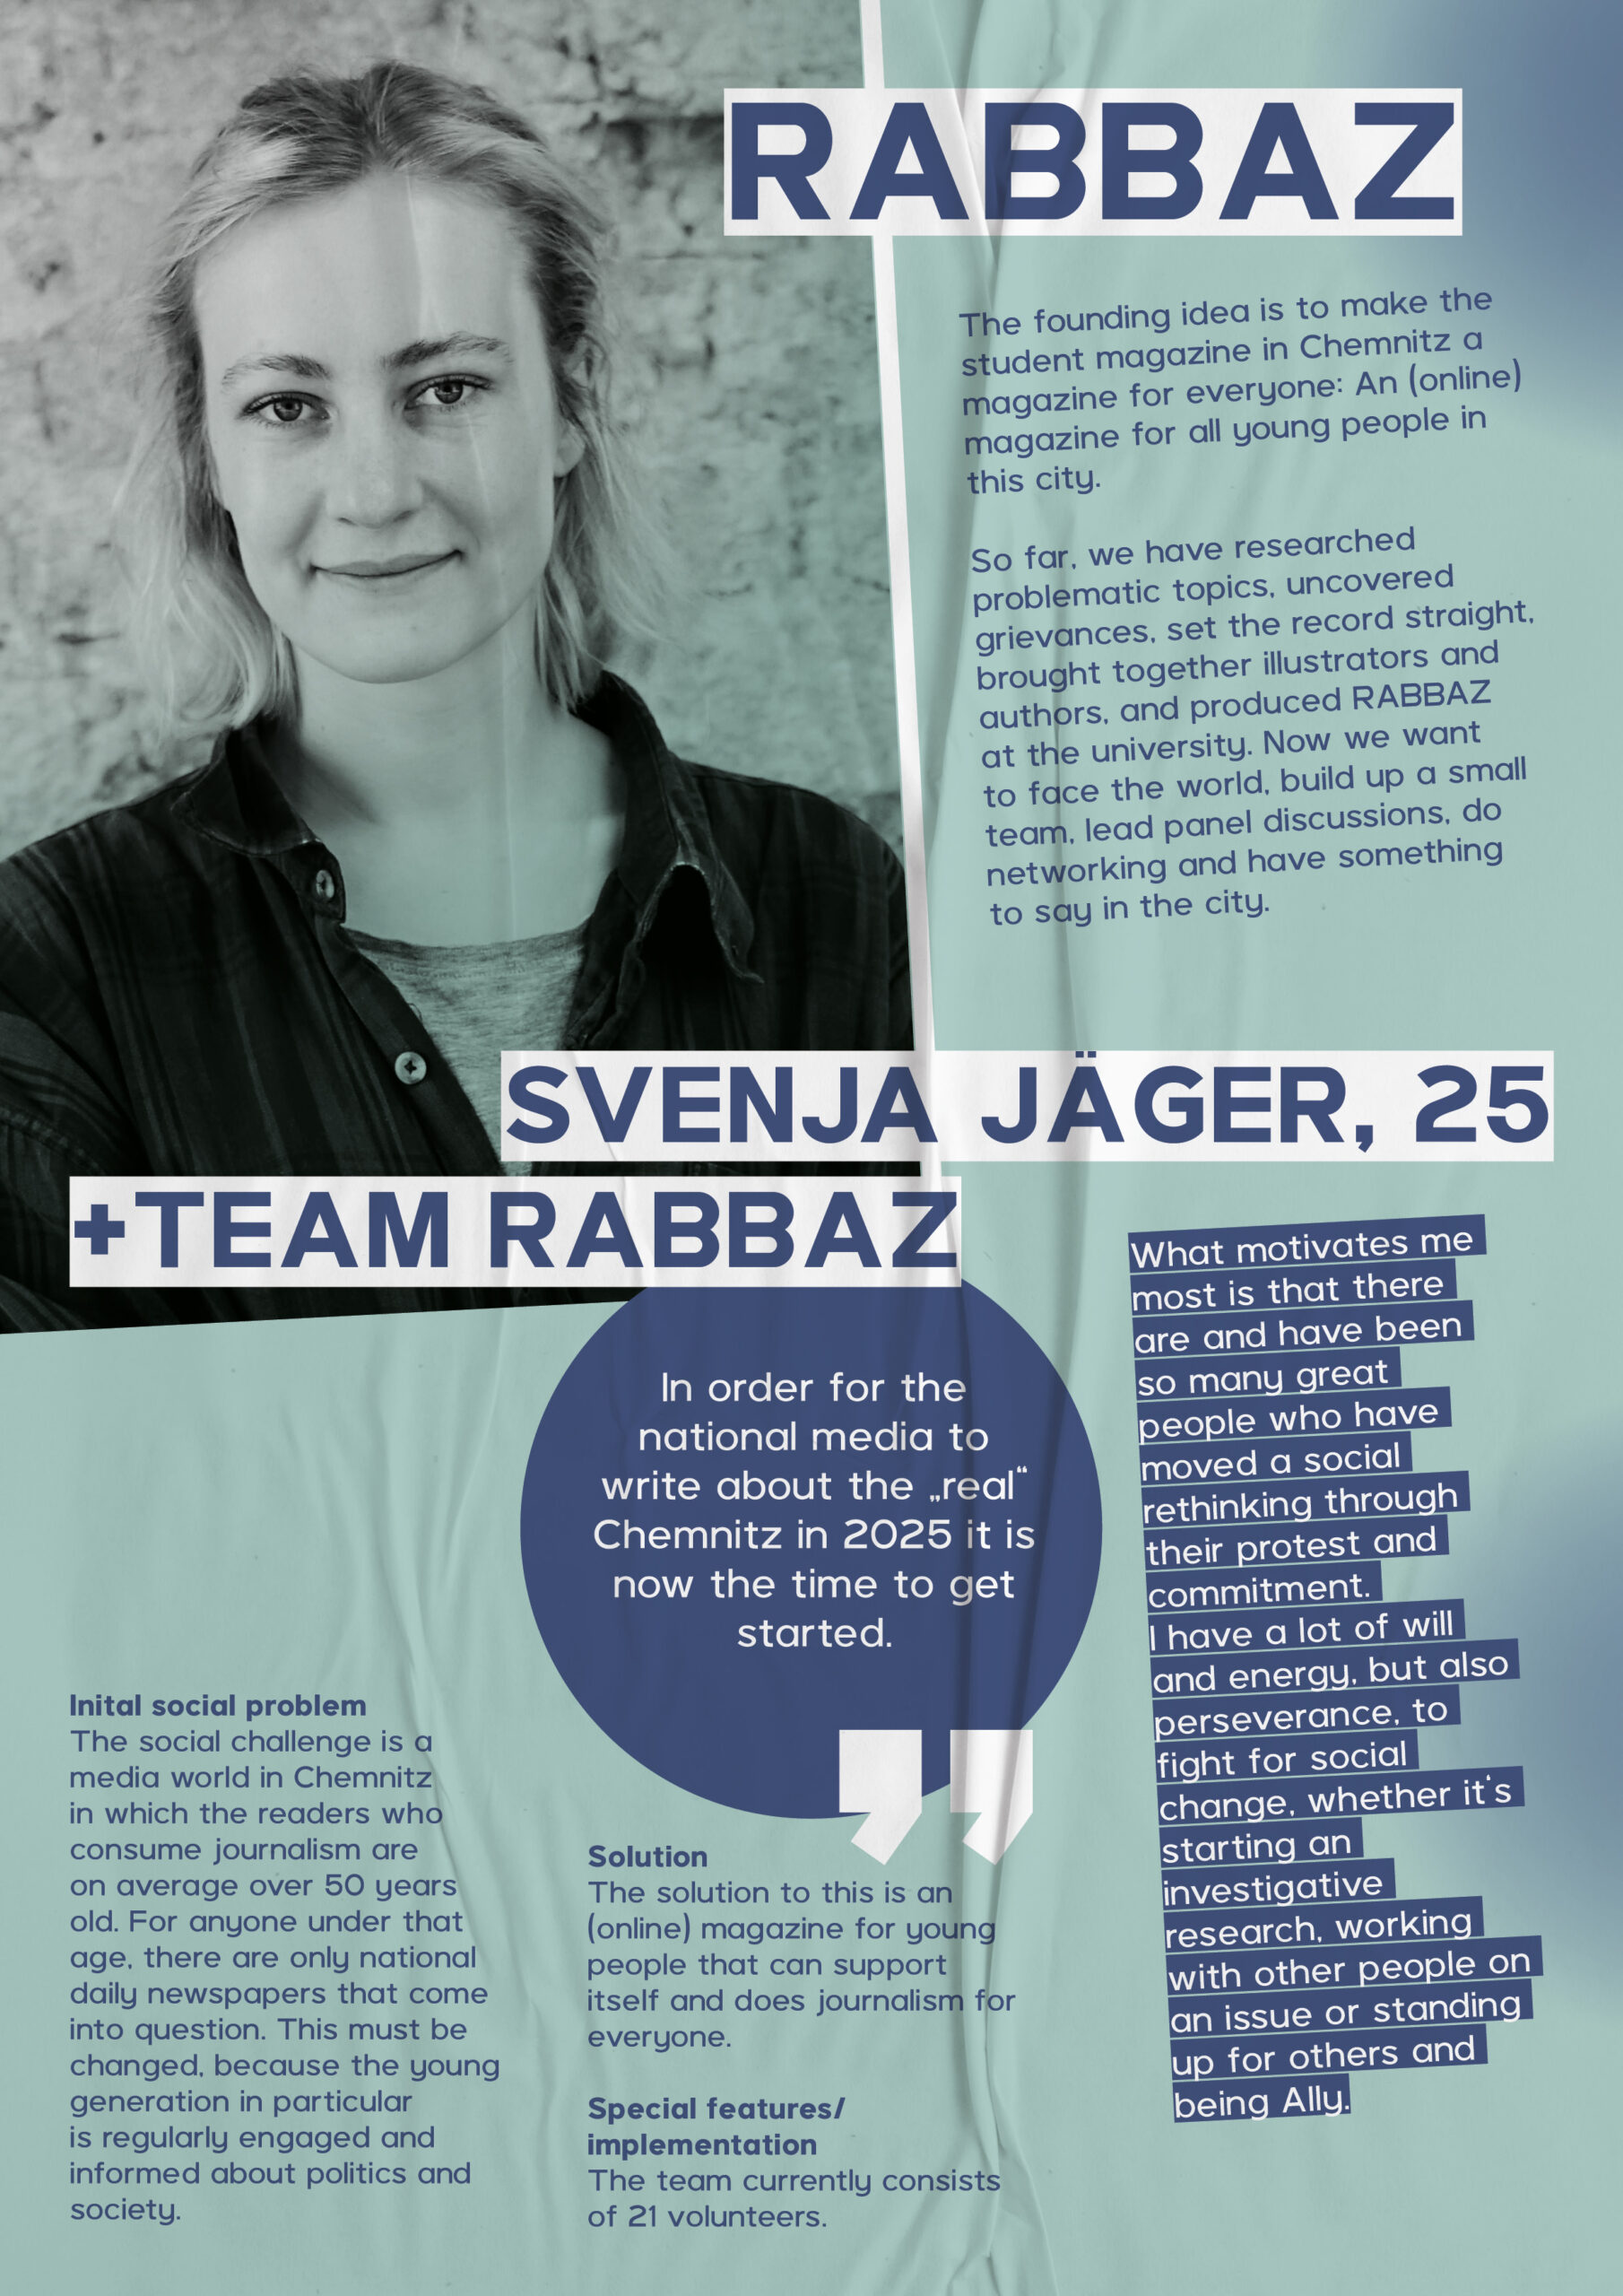 Svenja Jäger, 25, wants to make the student magazine Rabbaz a magazine for everyone, together with the Rabbaz team.